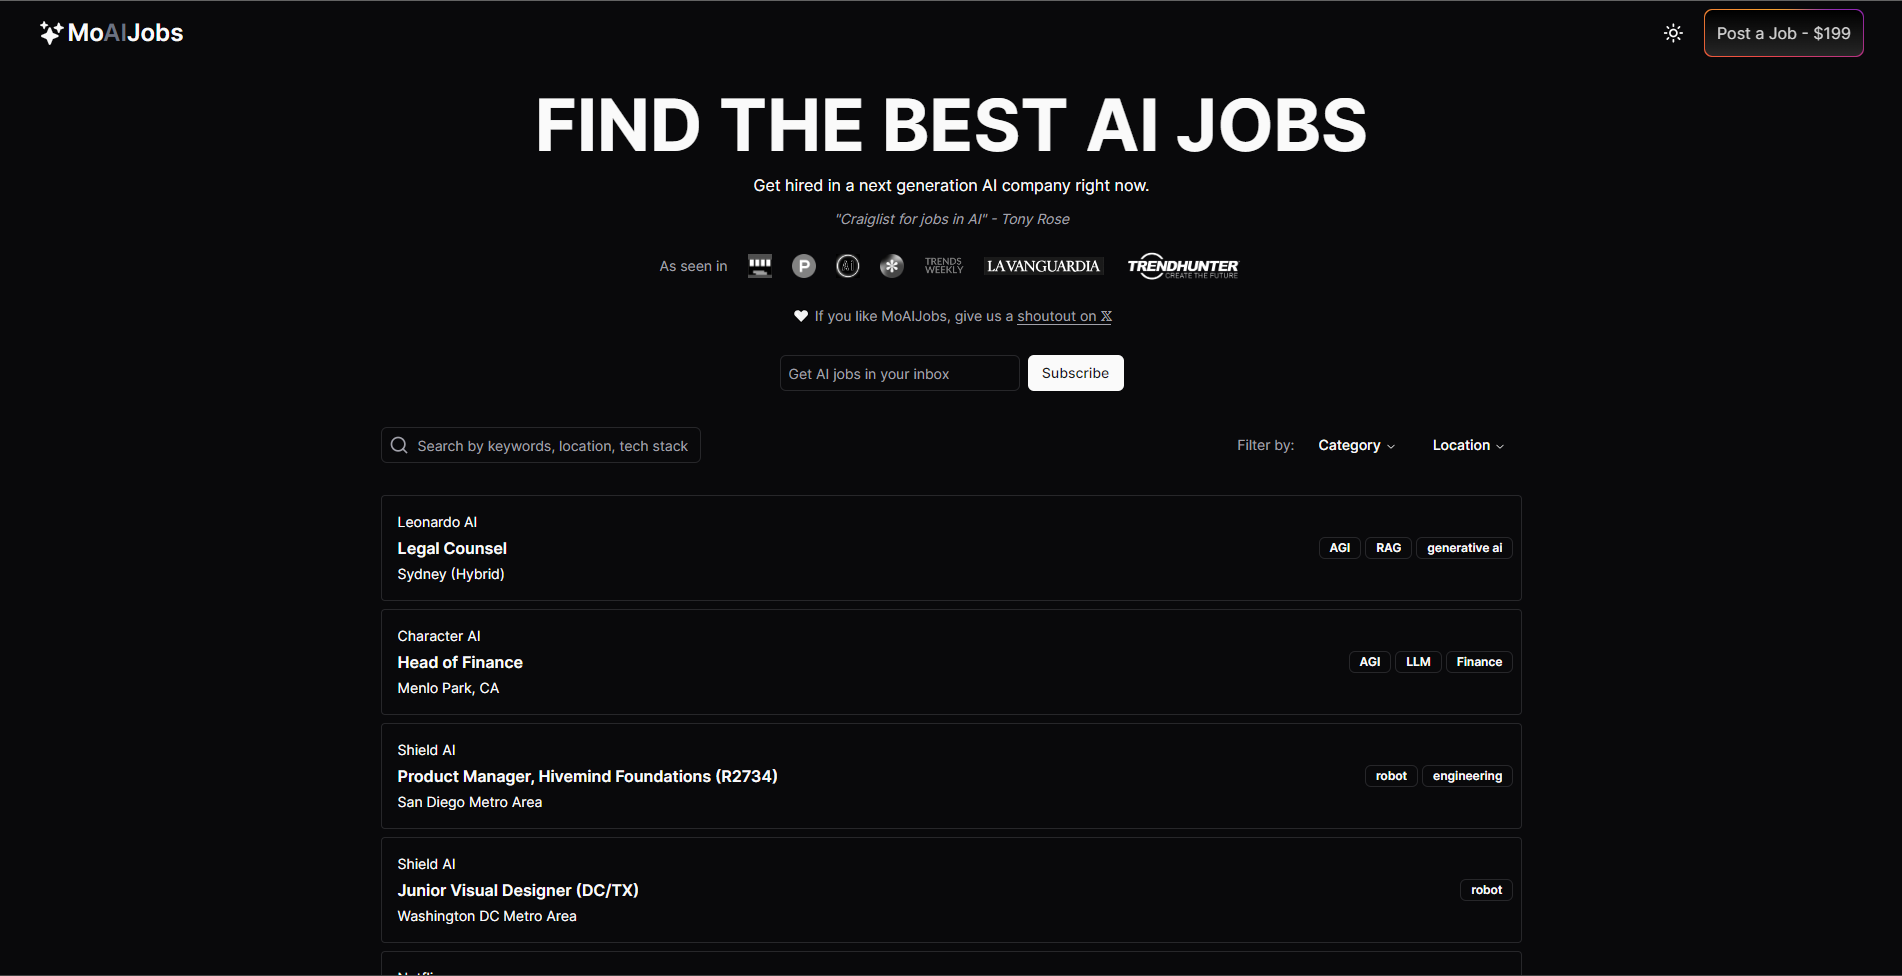 A job board for AI jobs